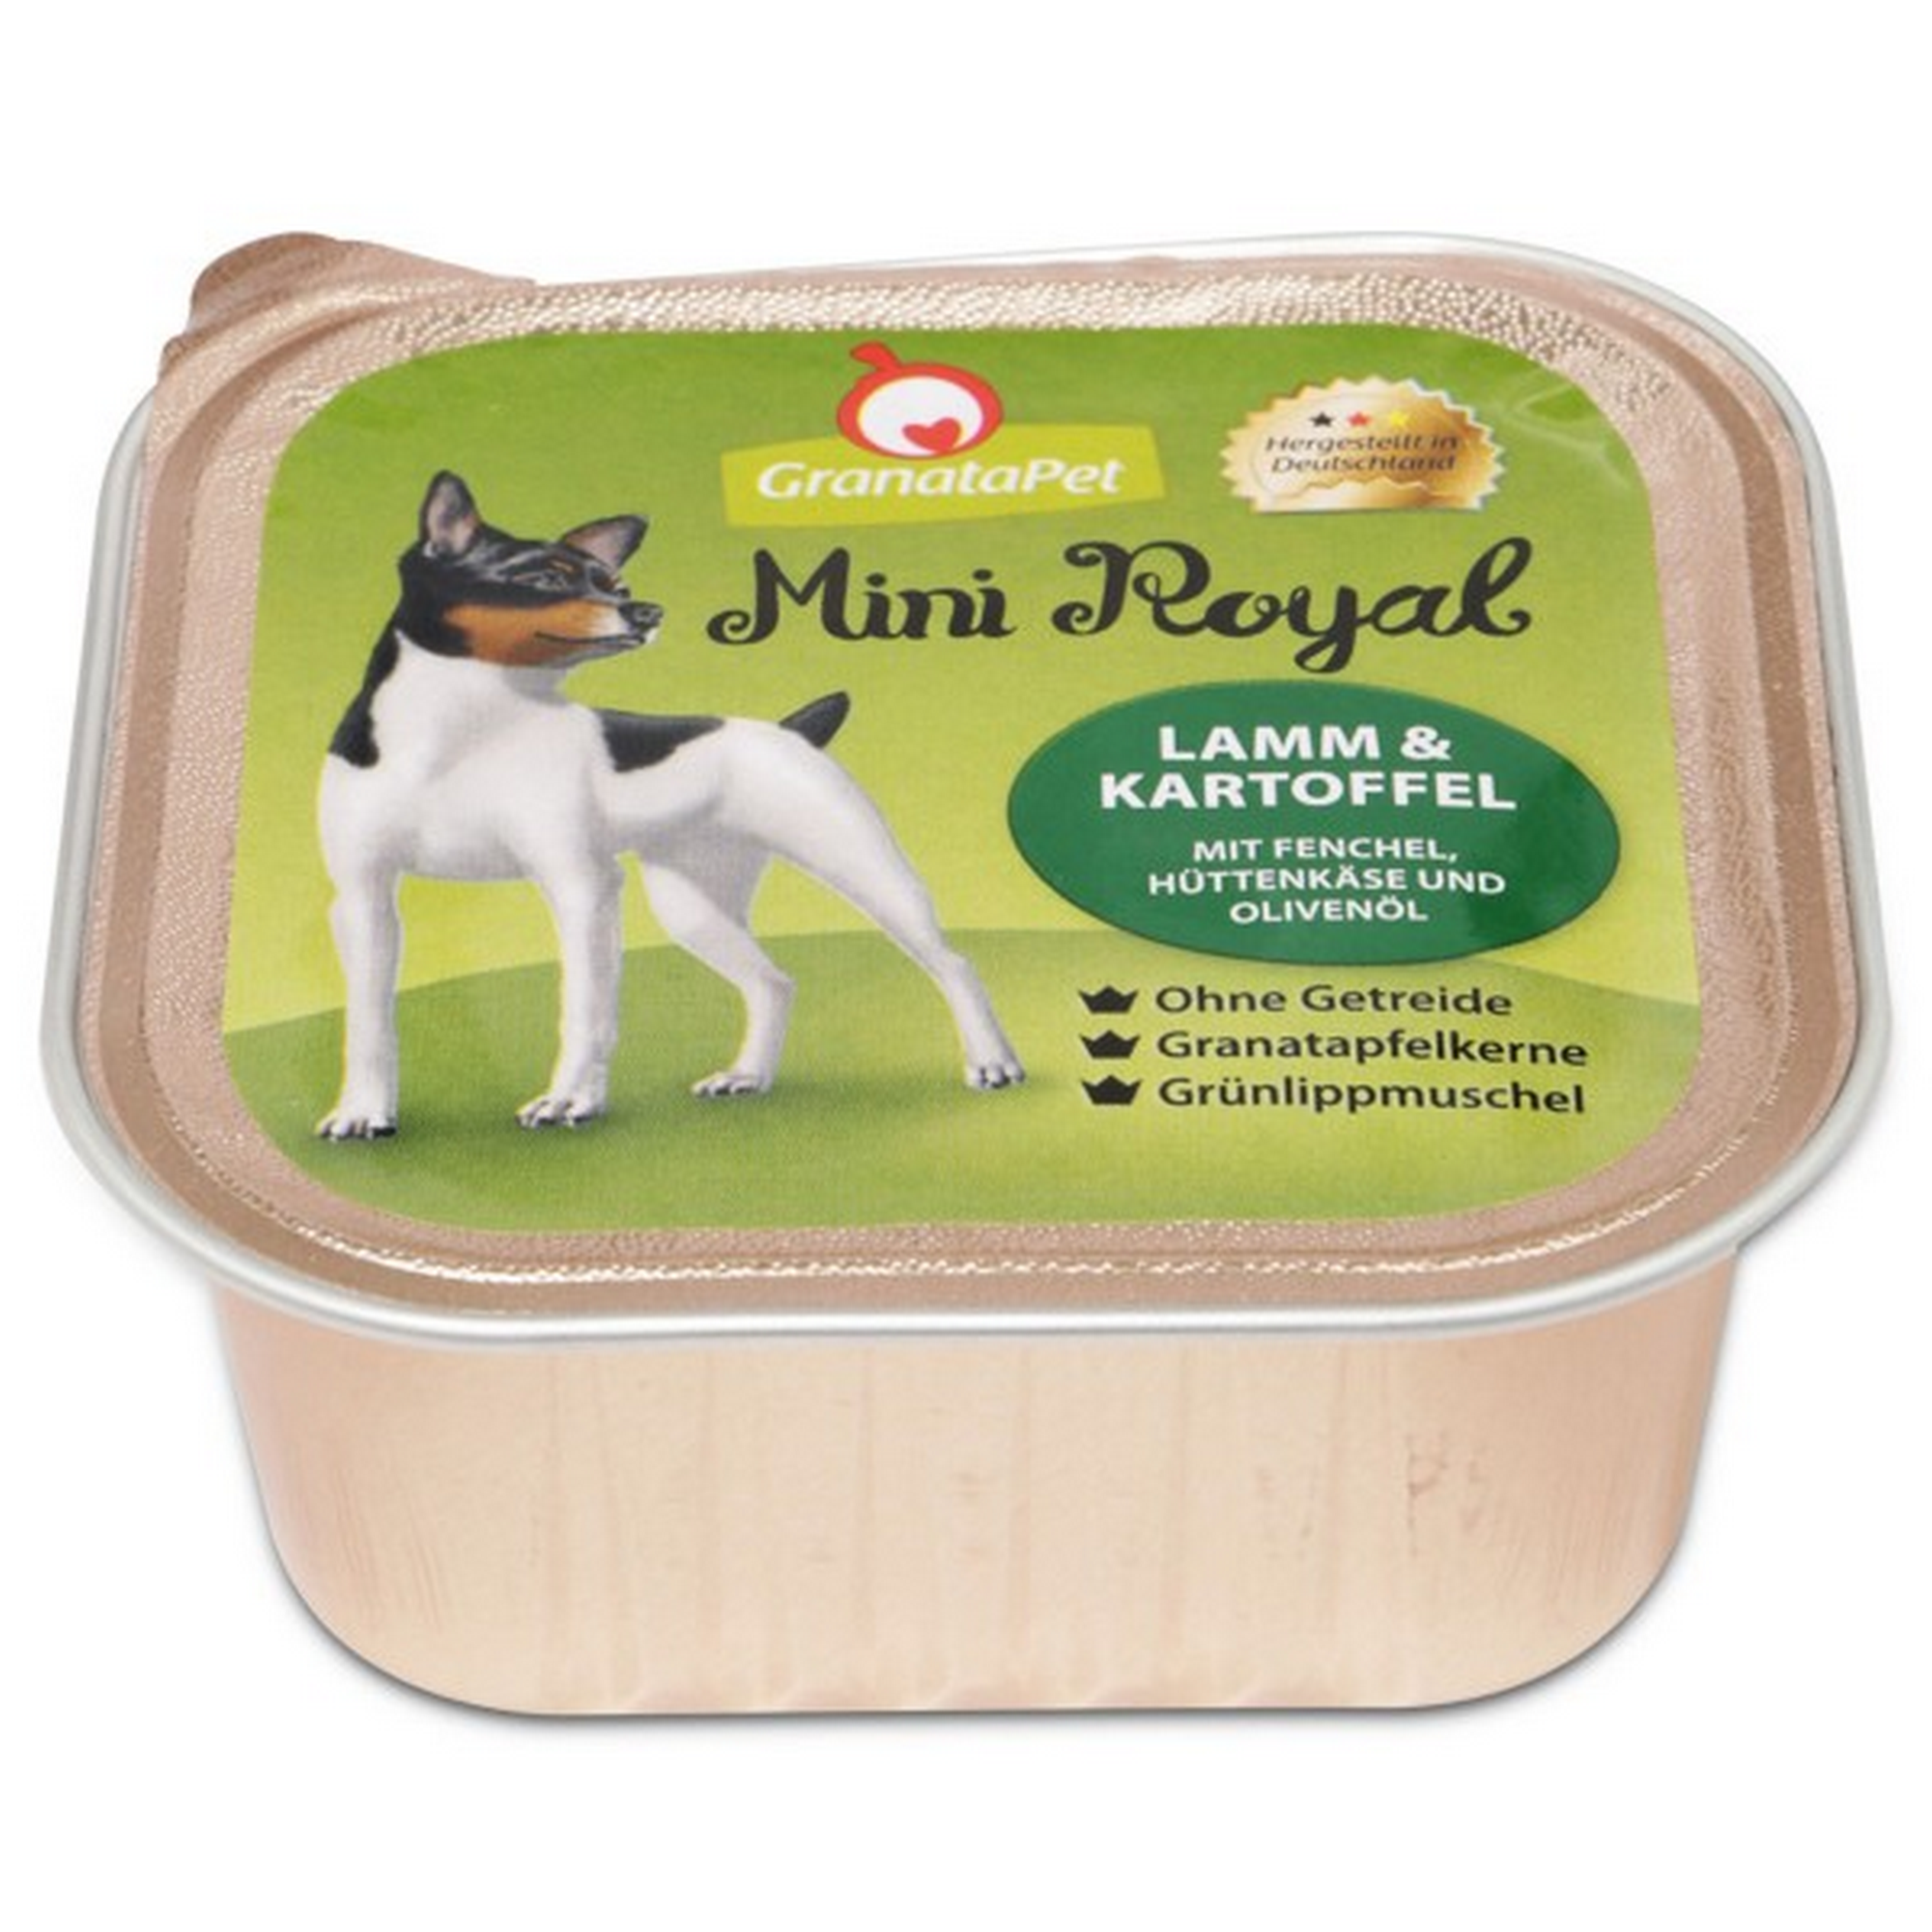 Hundenassfutter 'Mini Royal' Lamm & Kartoffel 150 g + product picture